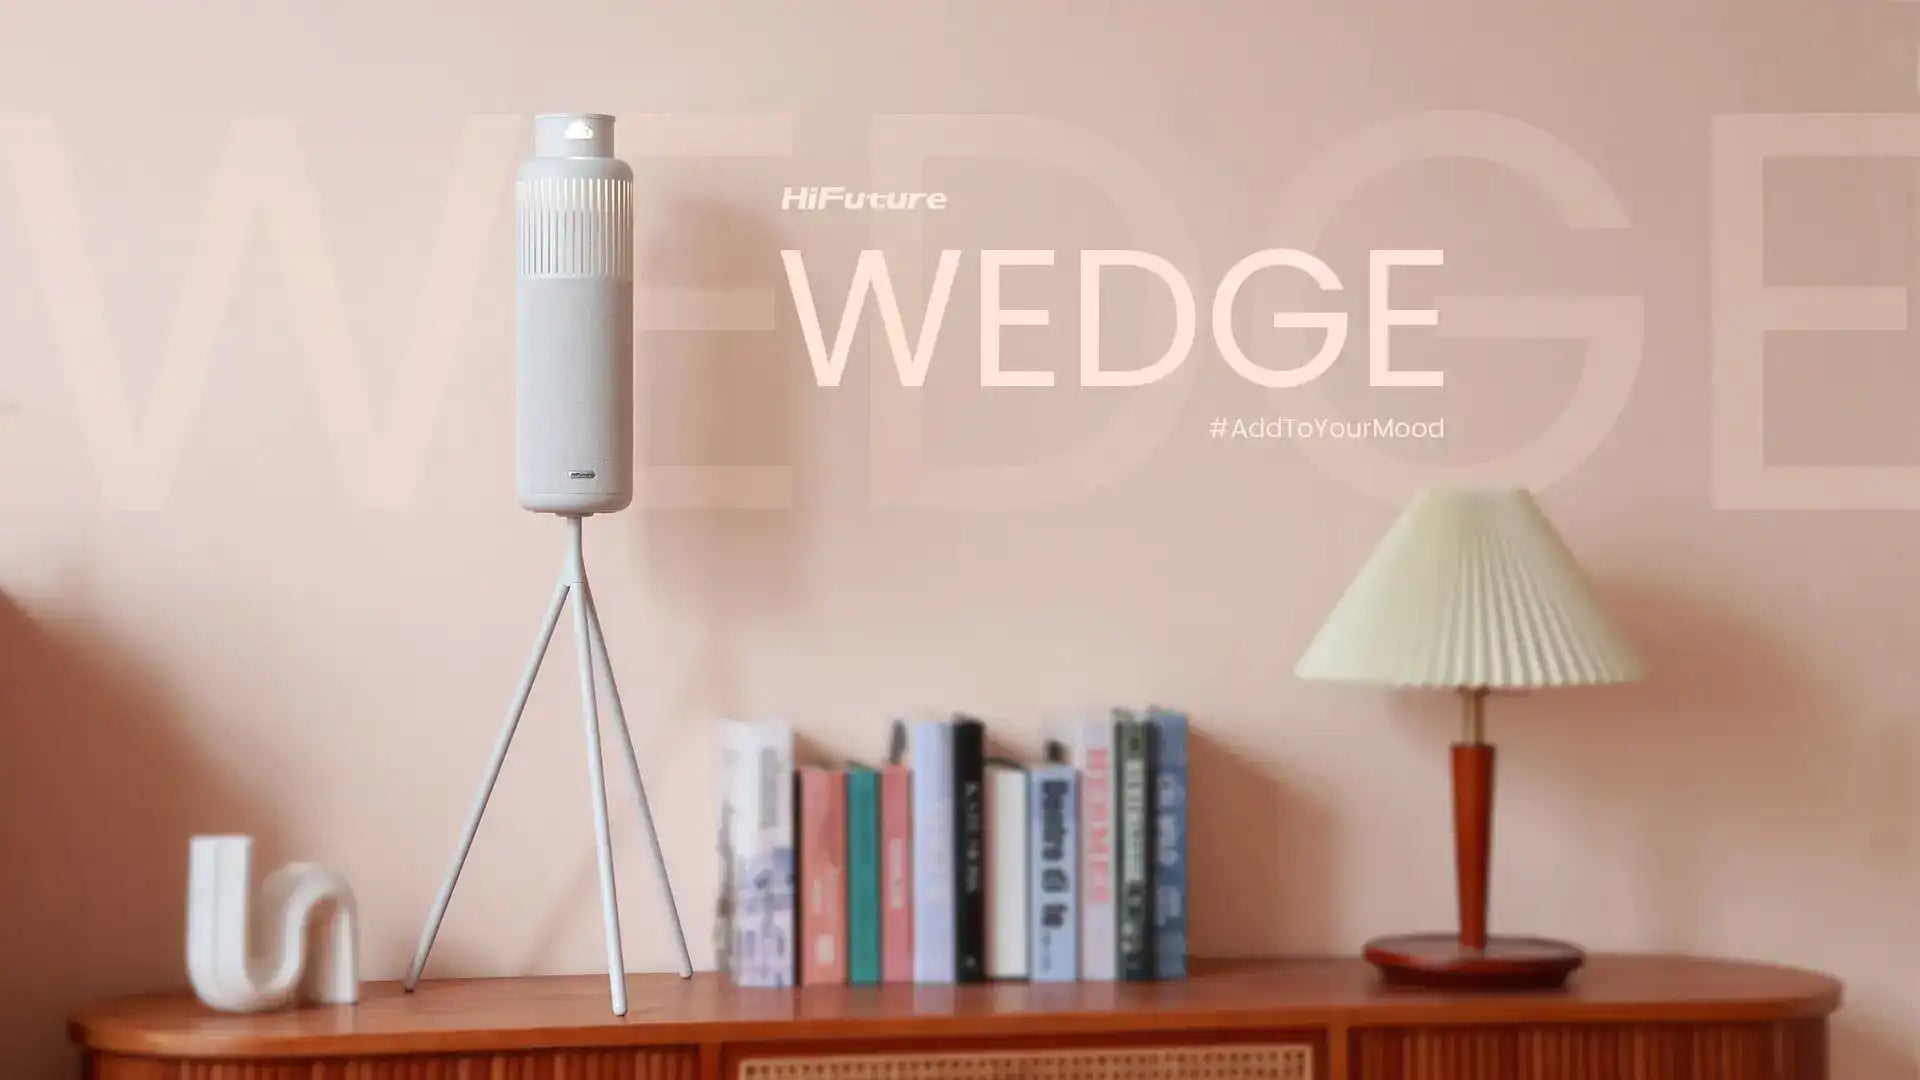 Beyond Music: How HiFuture's Wedge Speaker Enhances Daily Living